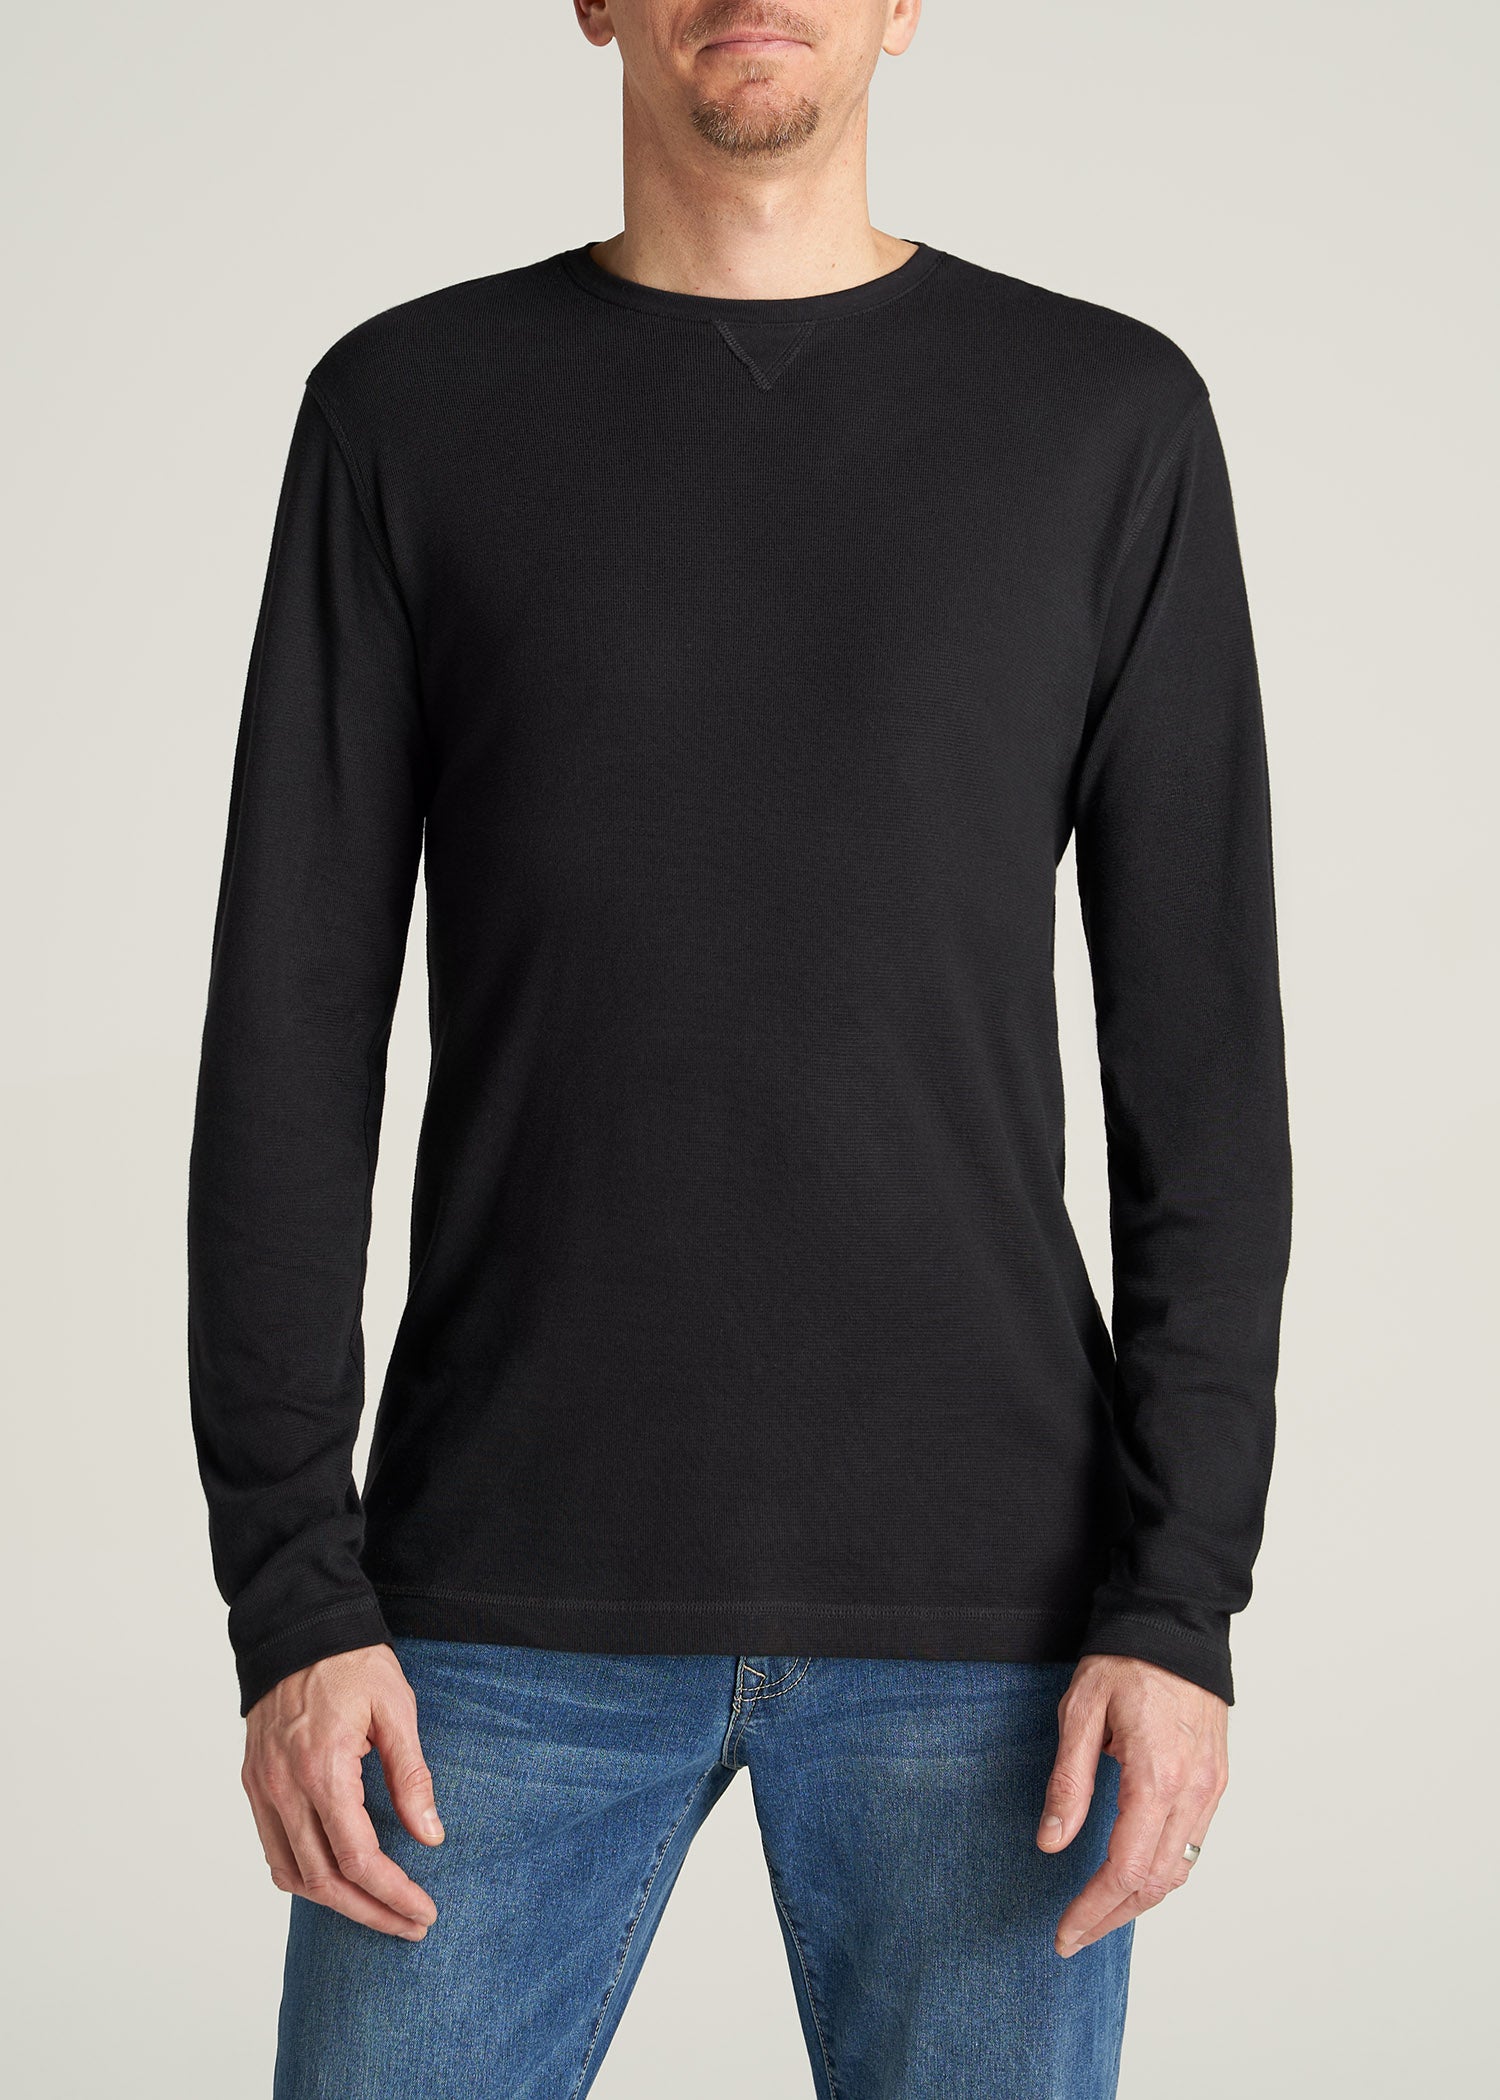 Lightweight Waffle Tall Long Sleeve Shirt in Black 2XL / Extra Tall / Black